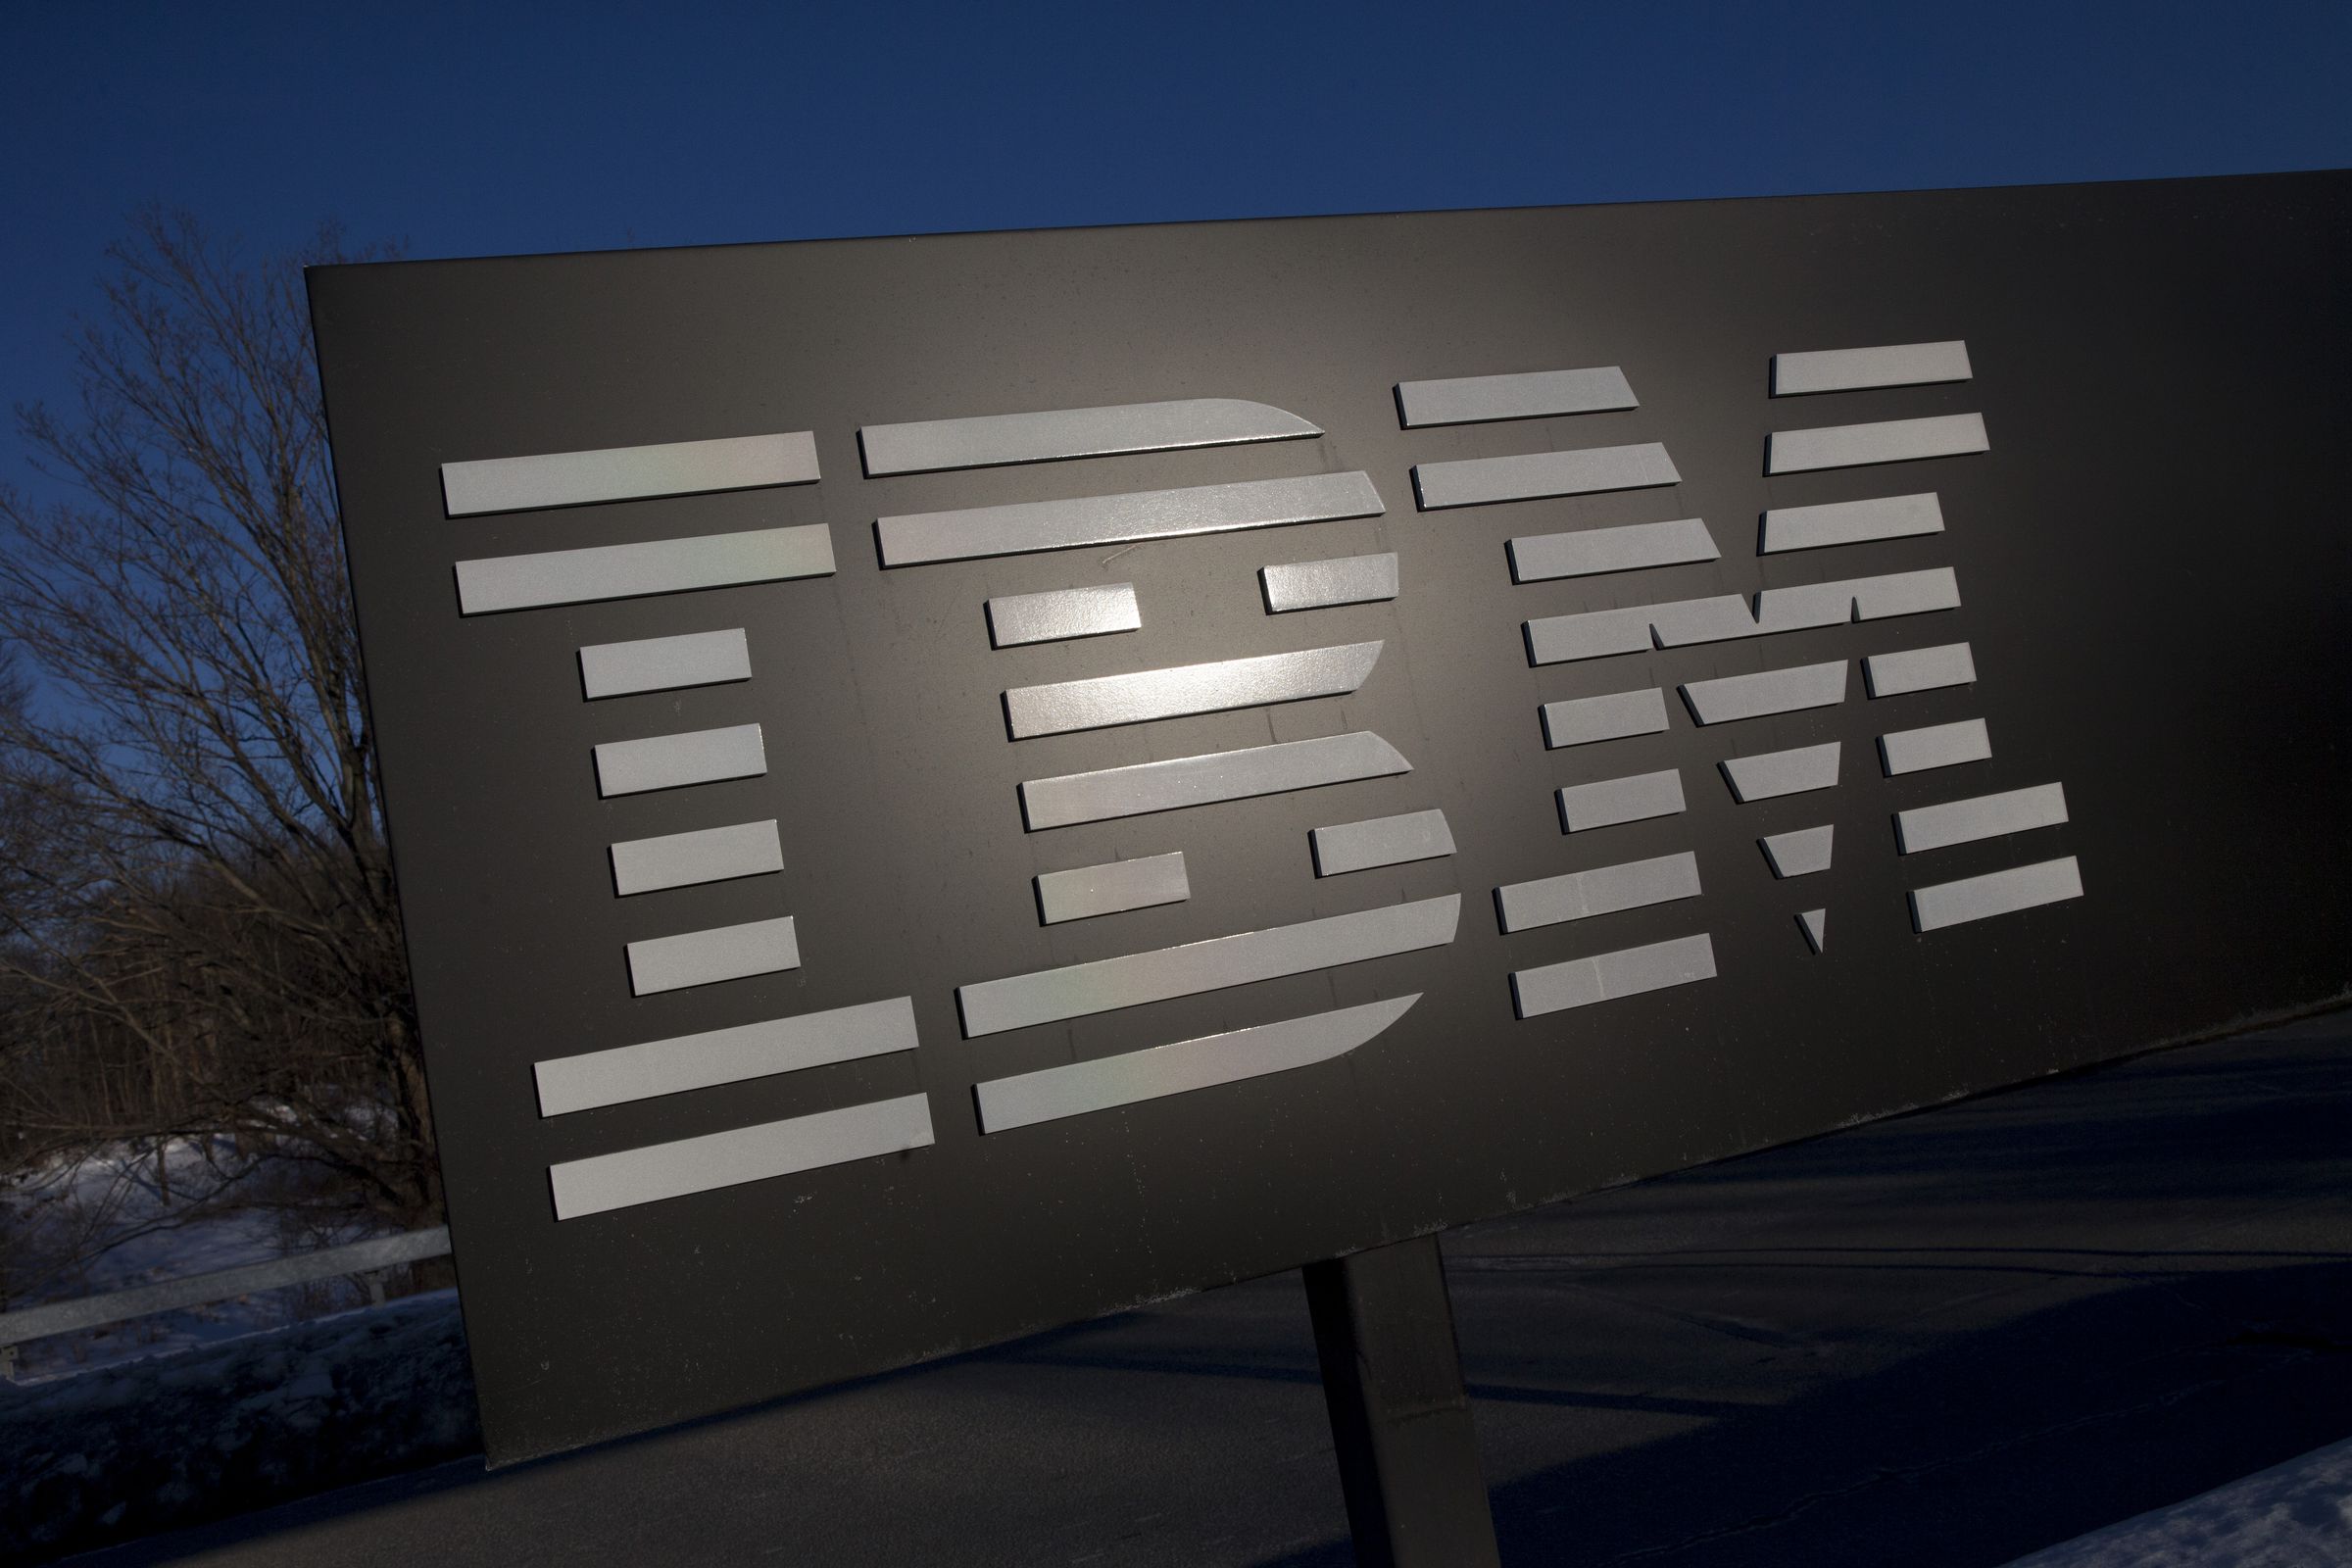 Inside IBM Research Headquarters